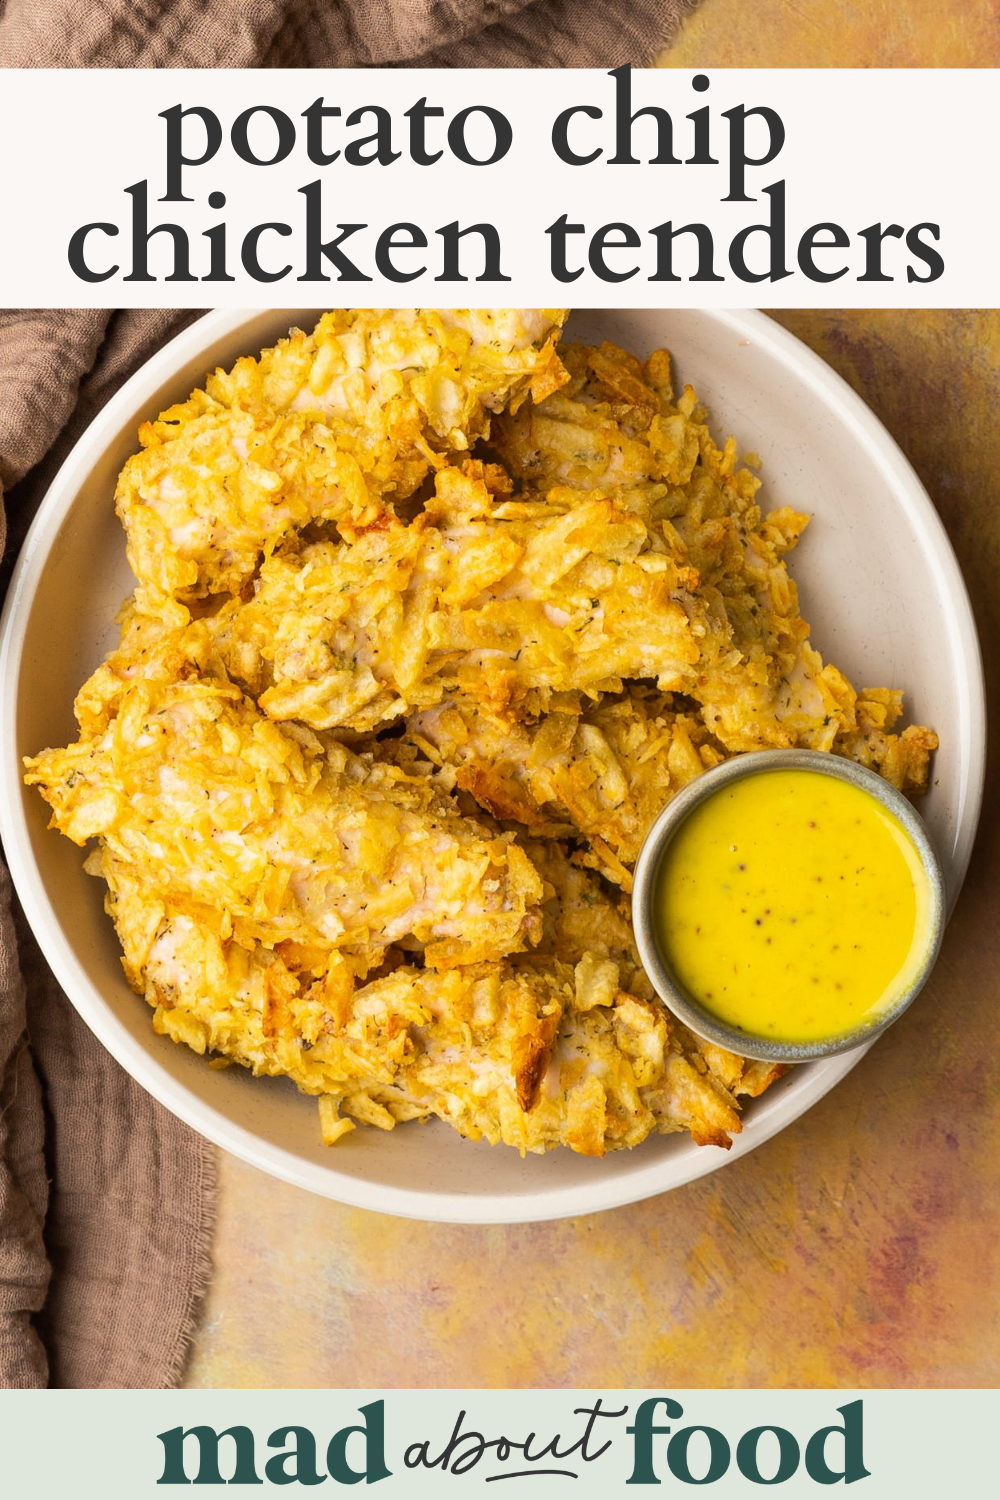 Image for pinning potato chip chicken tenders recipe on Pinterest